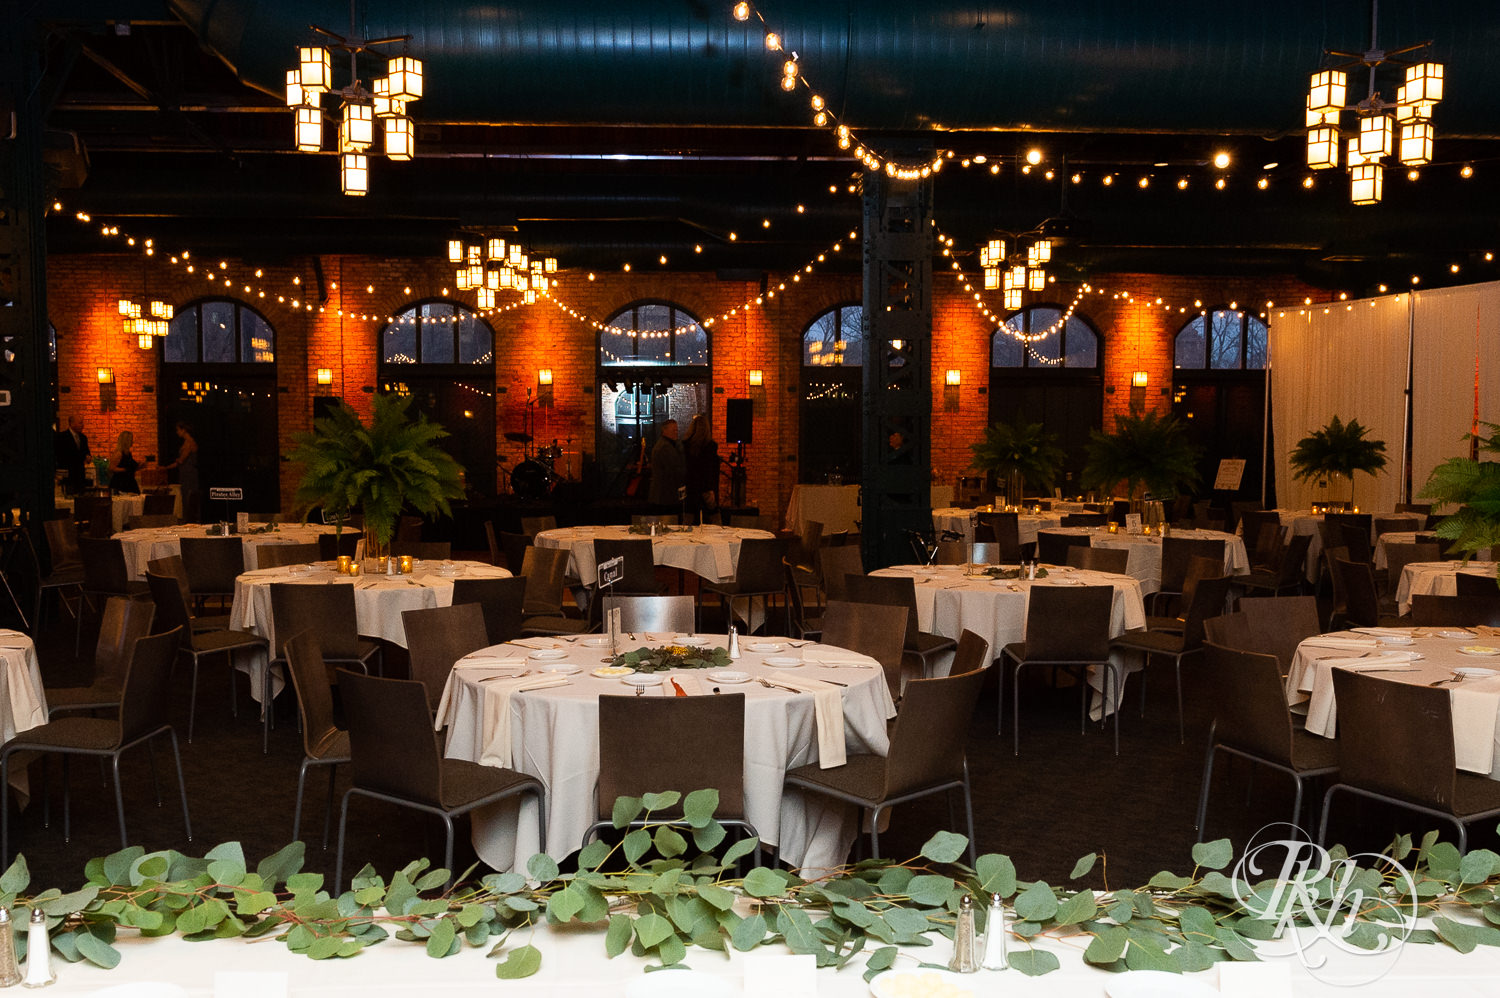 Indoor wedding reception setup at Nicollet Island Pavilion in Minneapolis, Minnesota. 